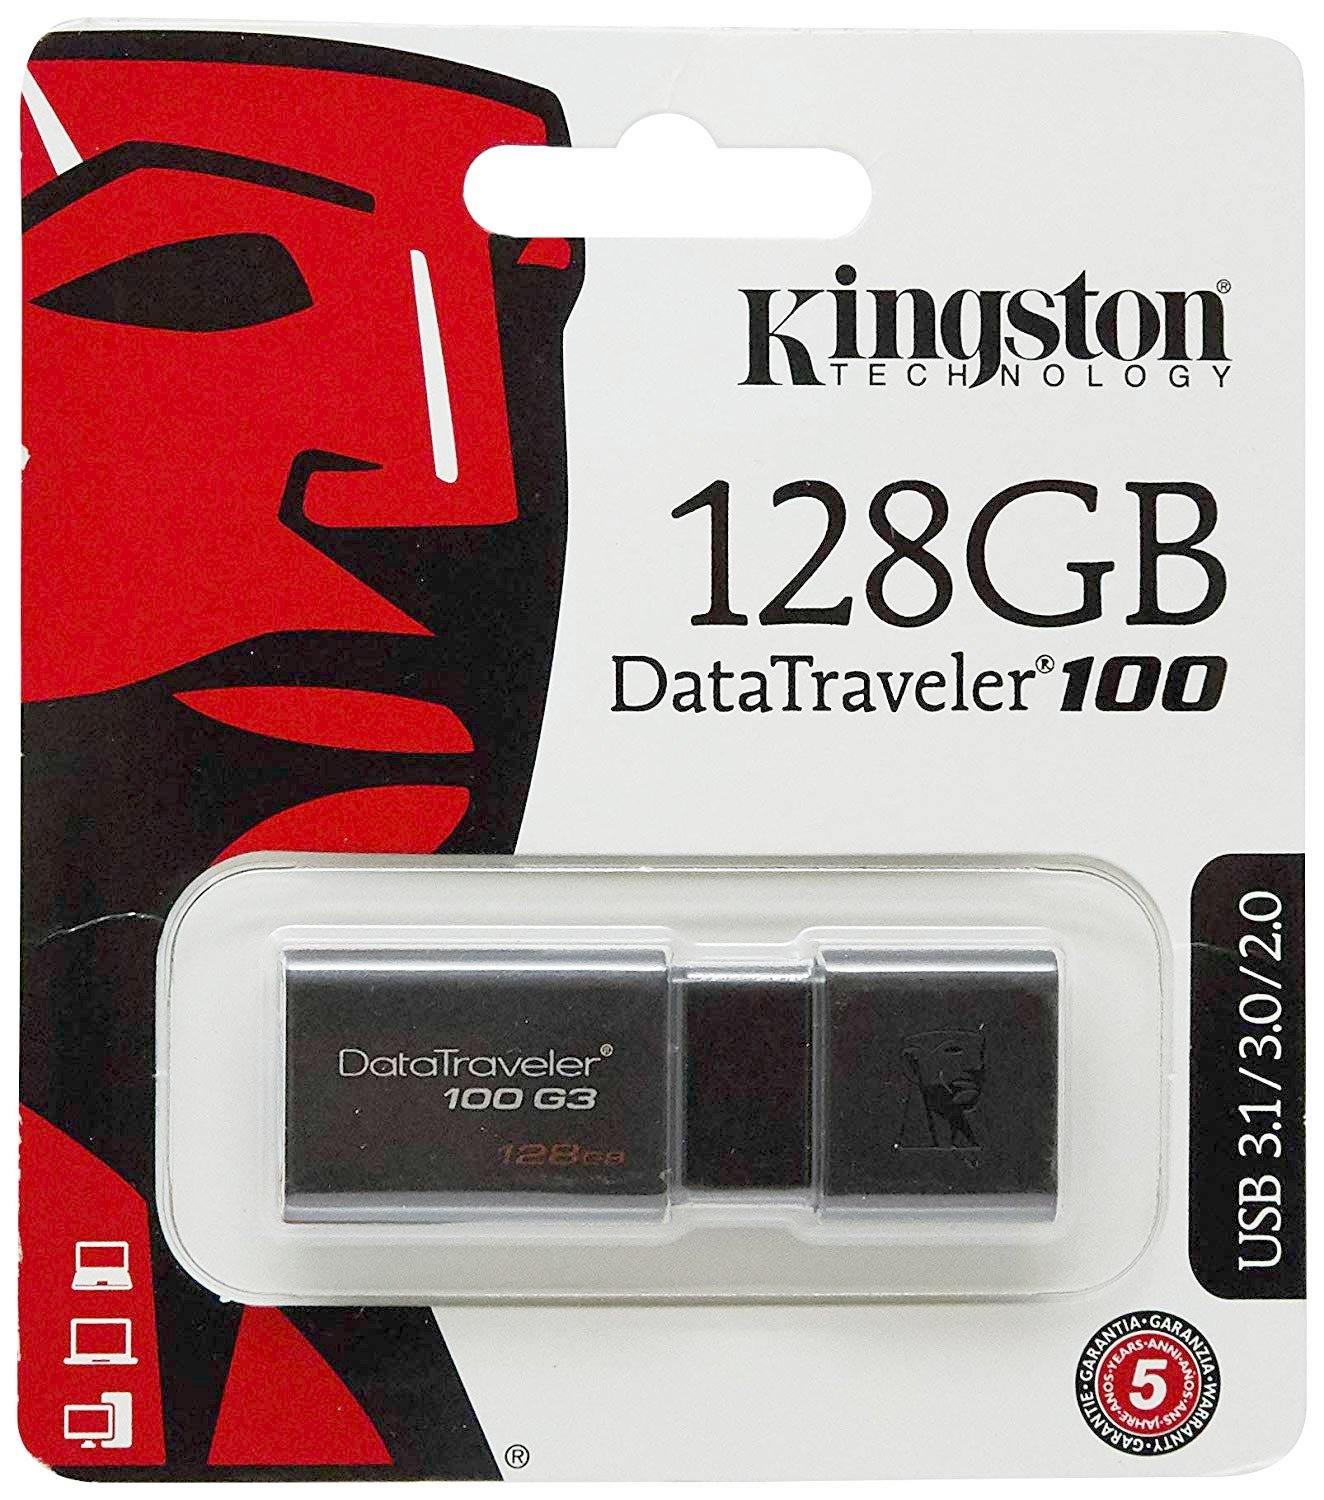 Kingston 128GB Data Traveler 100 G3 USB 3.0 Flash Drive - ShopLibertyStore.com